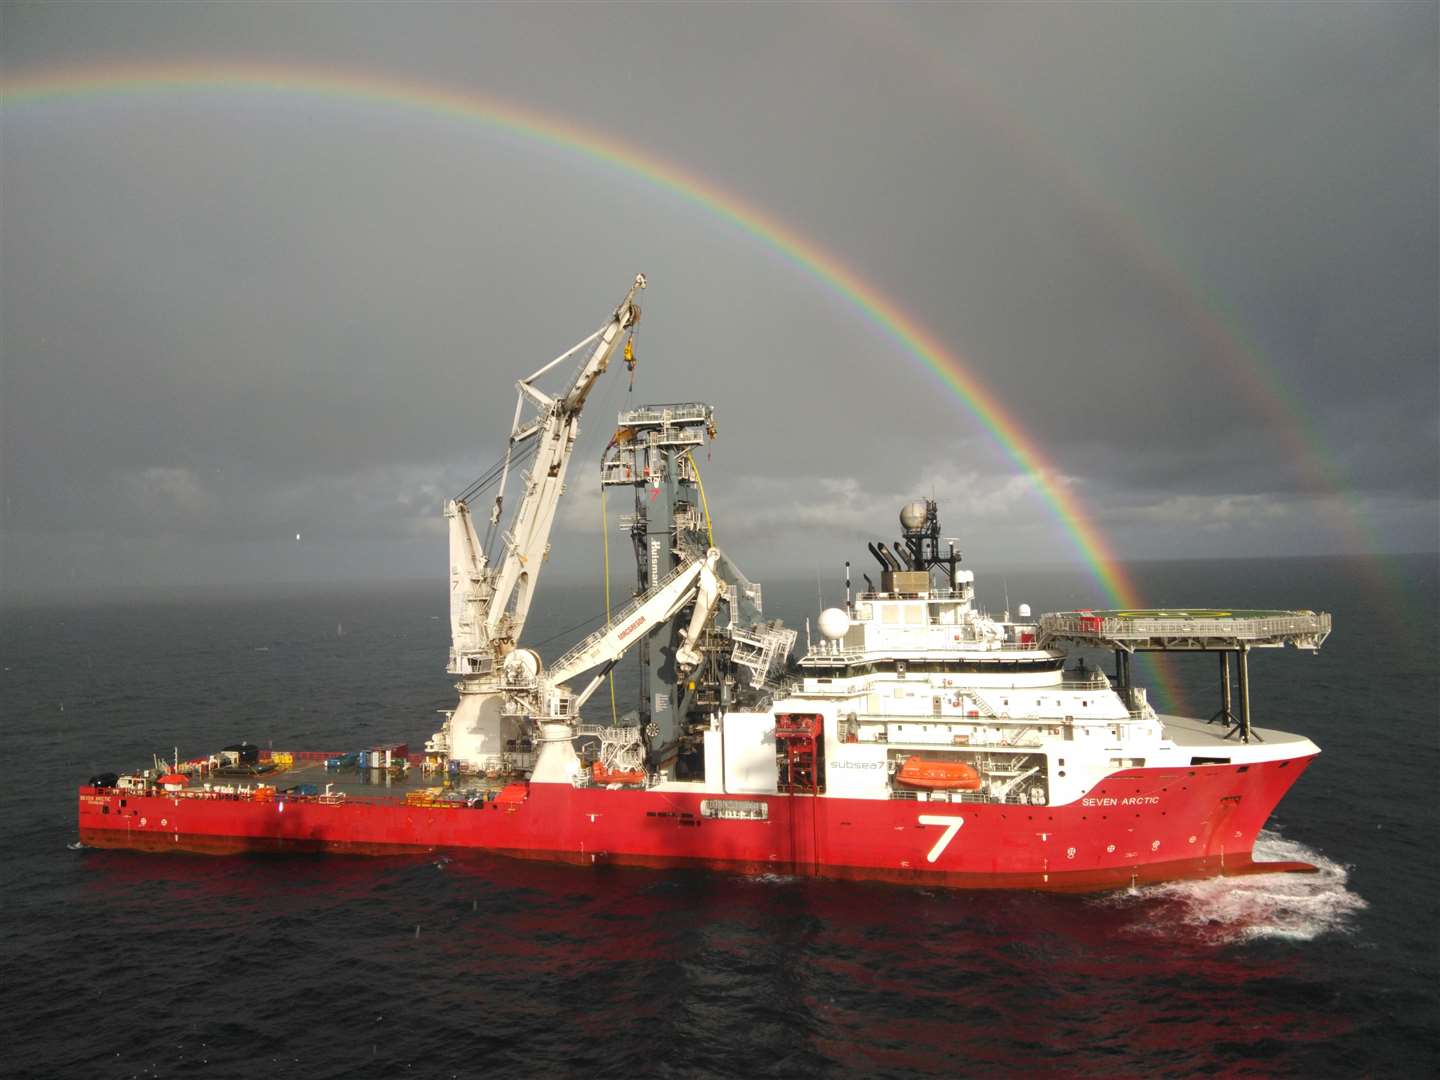 Subsea 7's heavy construction/flex-lay vessel Seven Arctic.